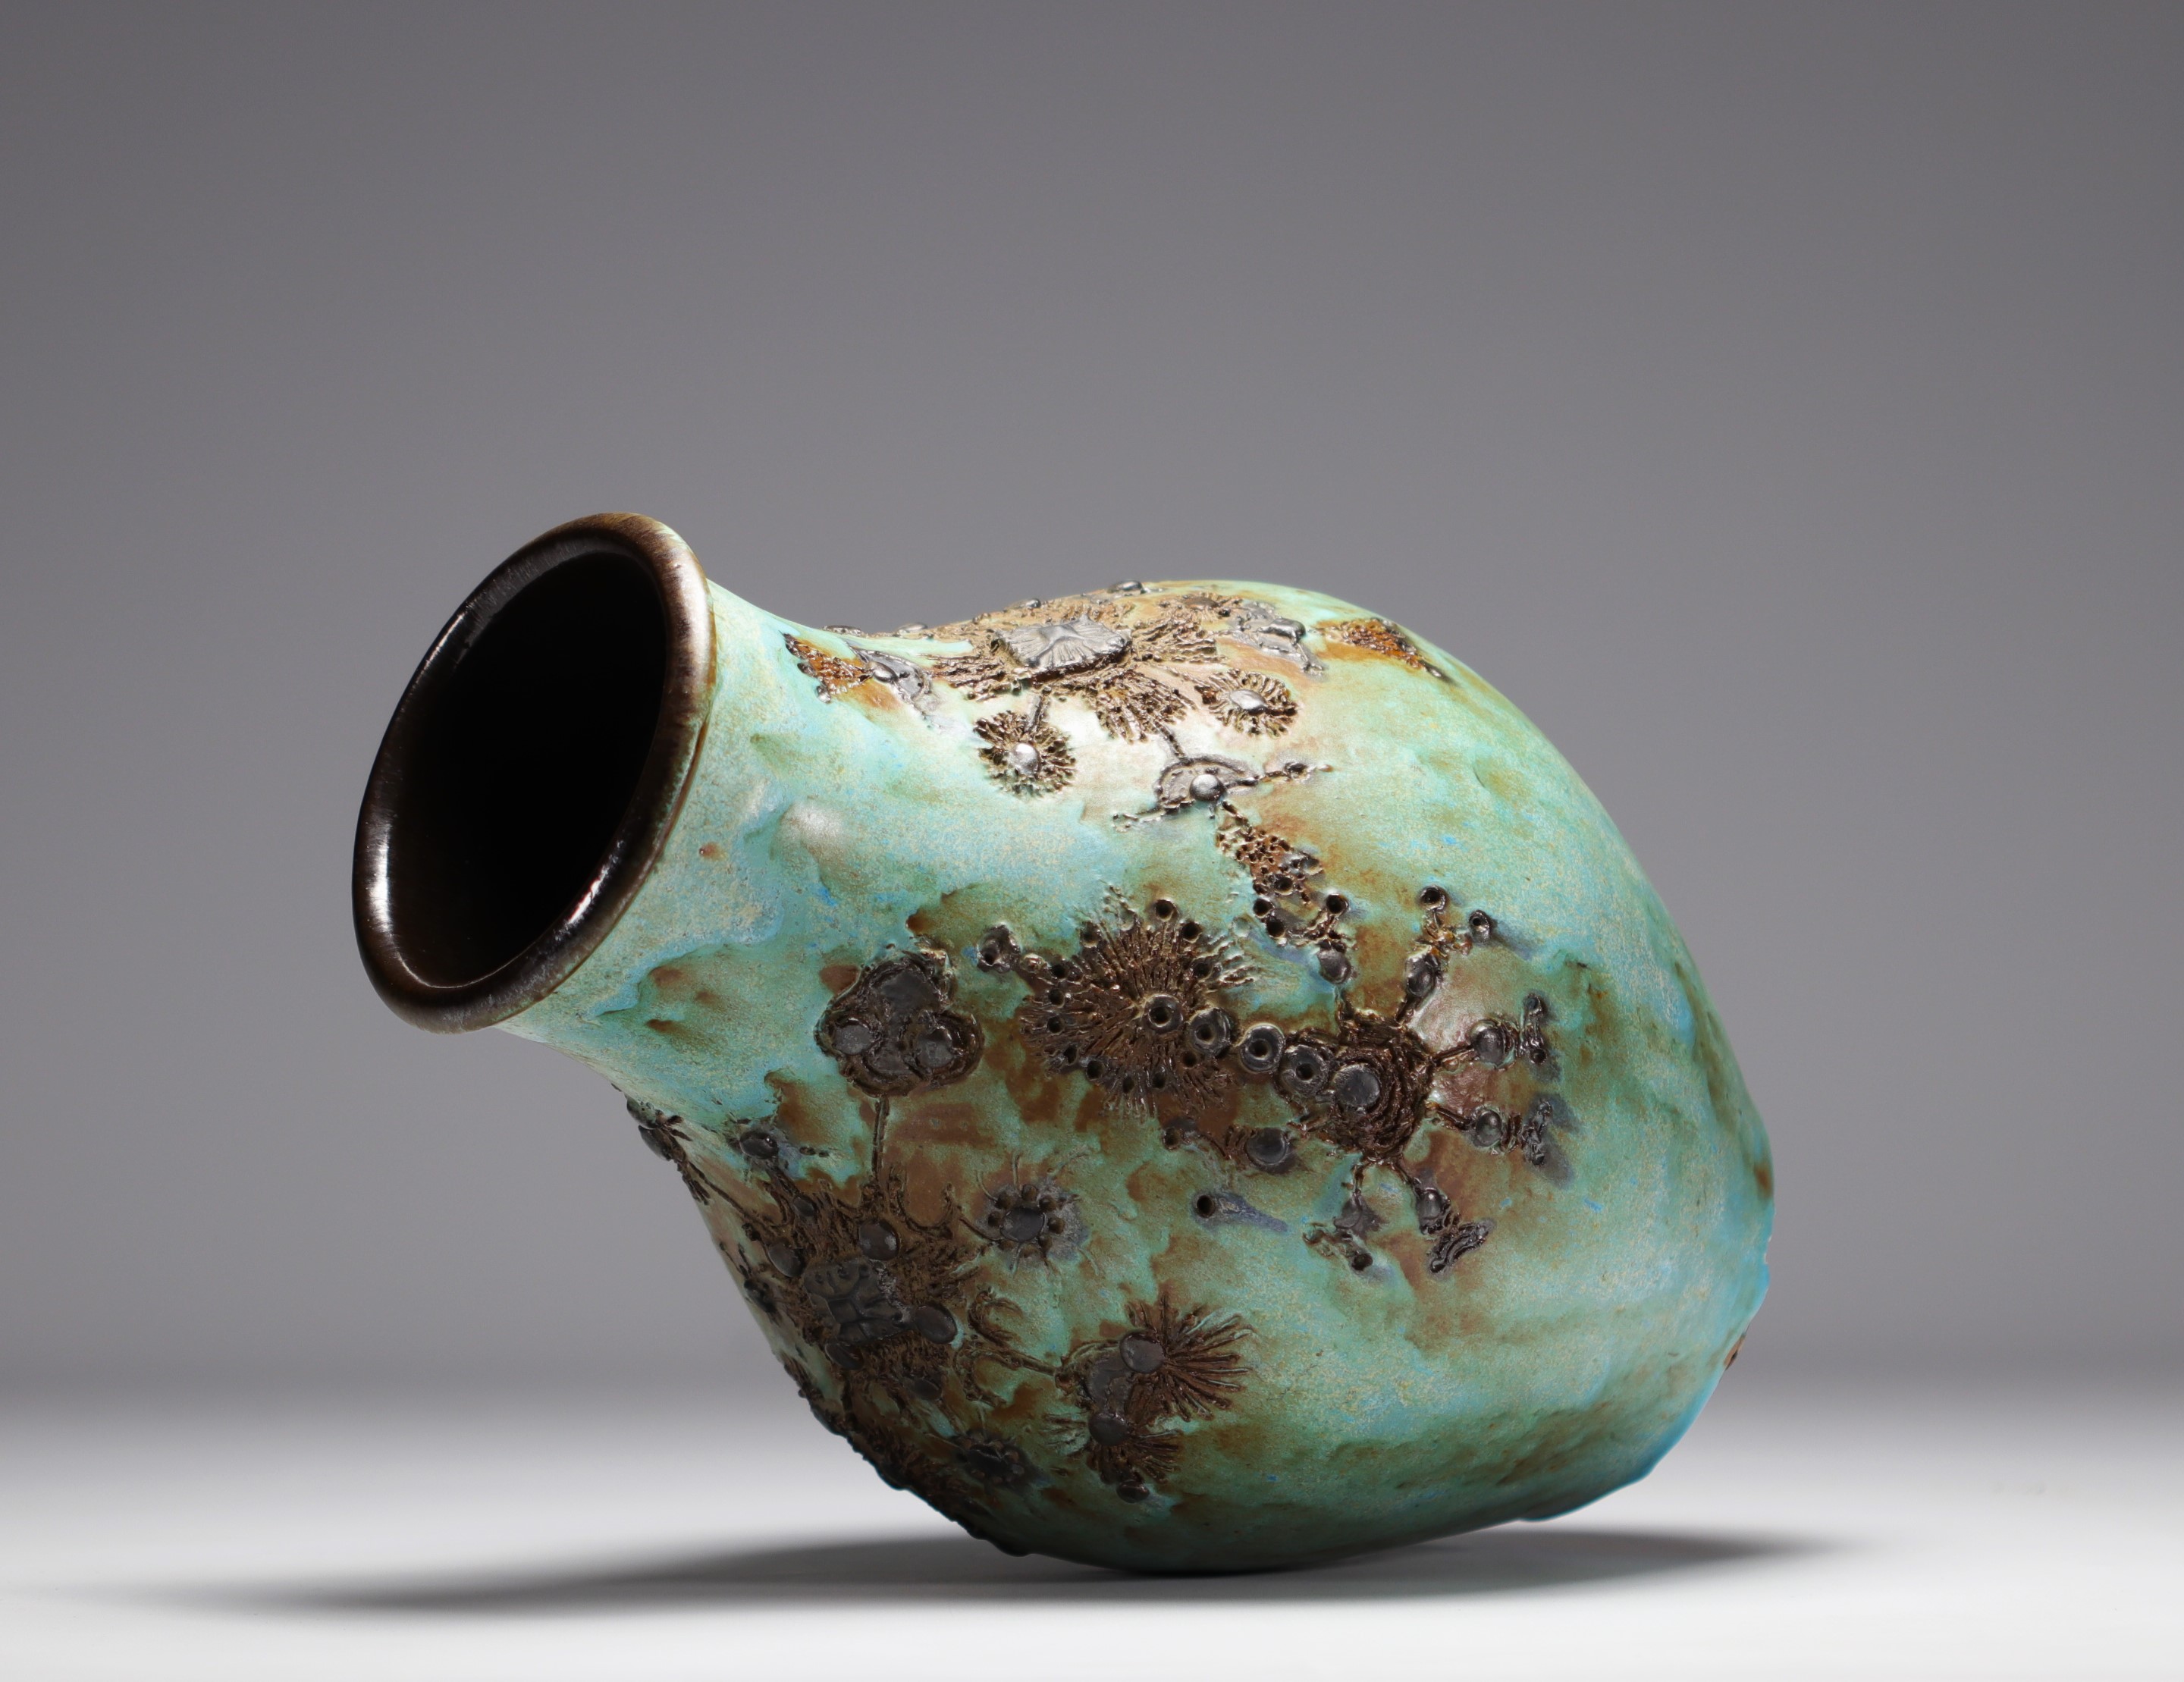 Jerome VANDEWEGHE Atelier Perignem Aphora - Glazed ceramic vase. - Image 2 of 4